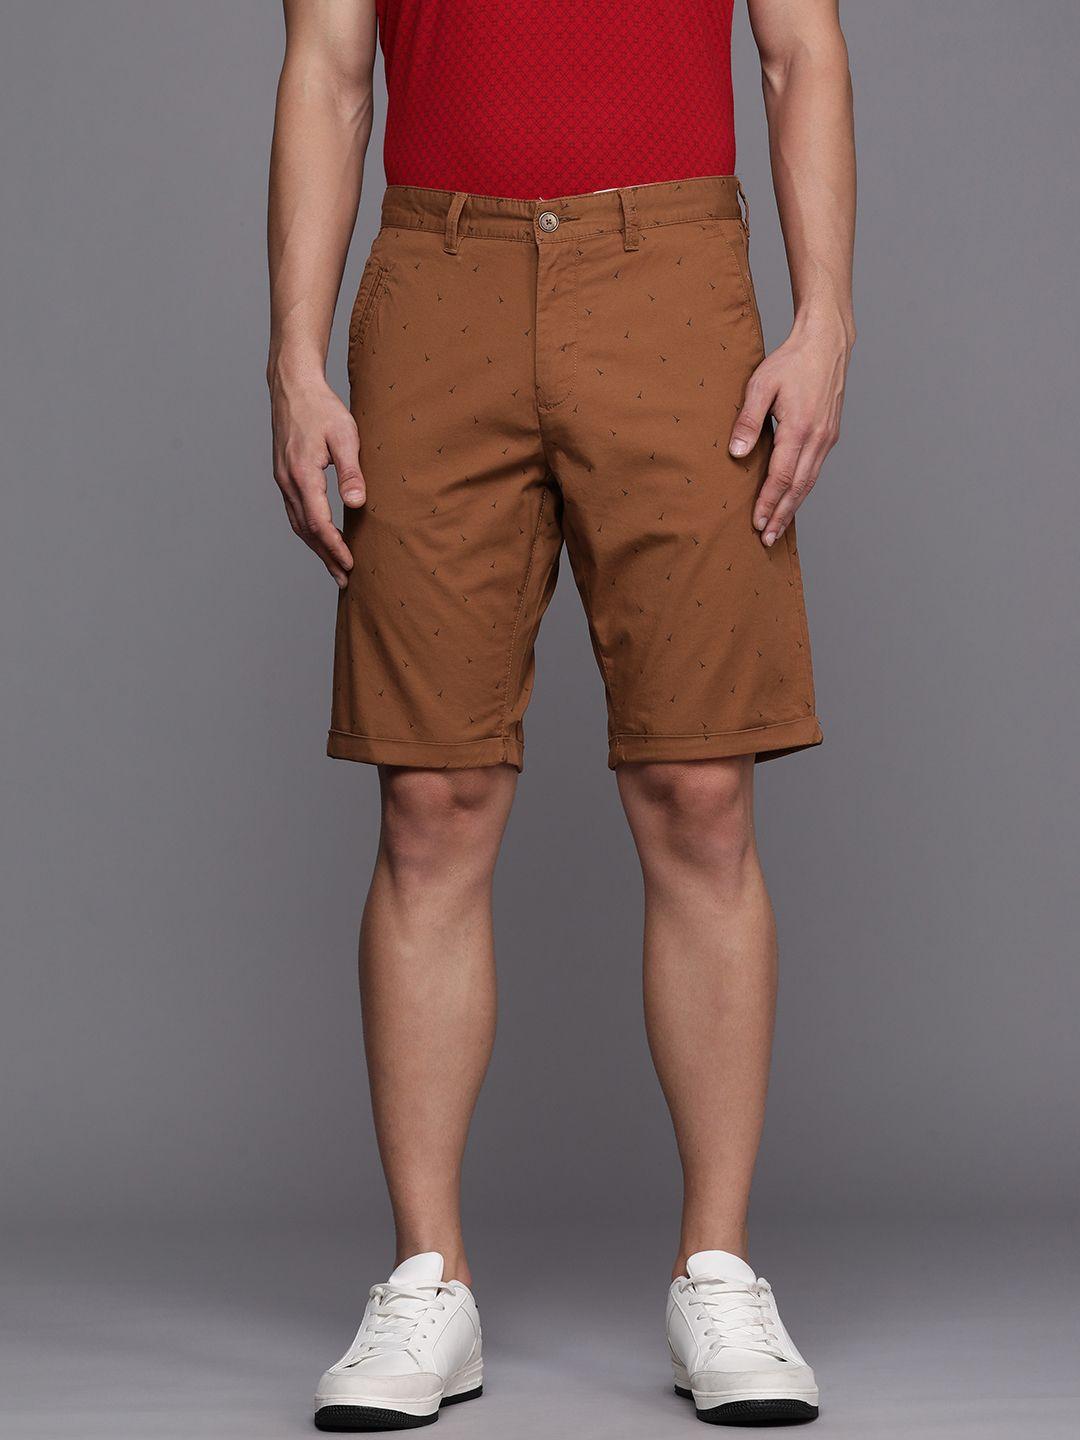 louis philippe sport men tan- coloured & black conversational printed slim fit shorts